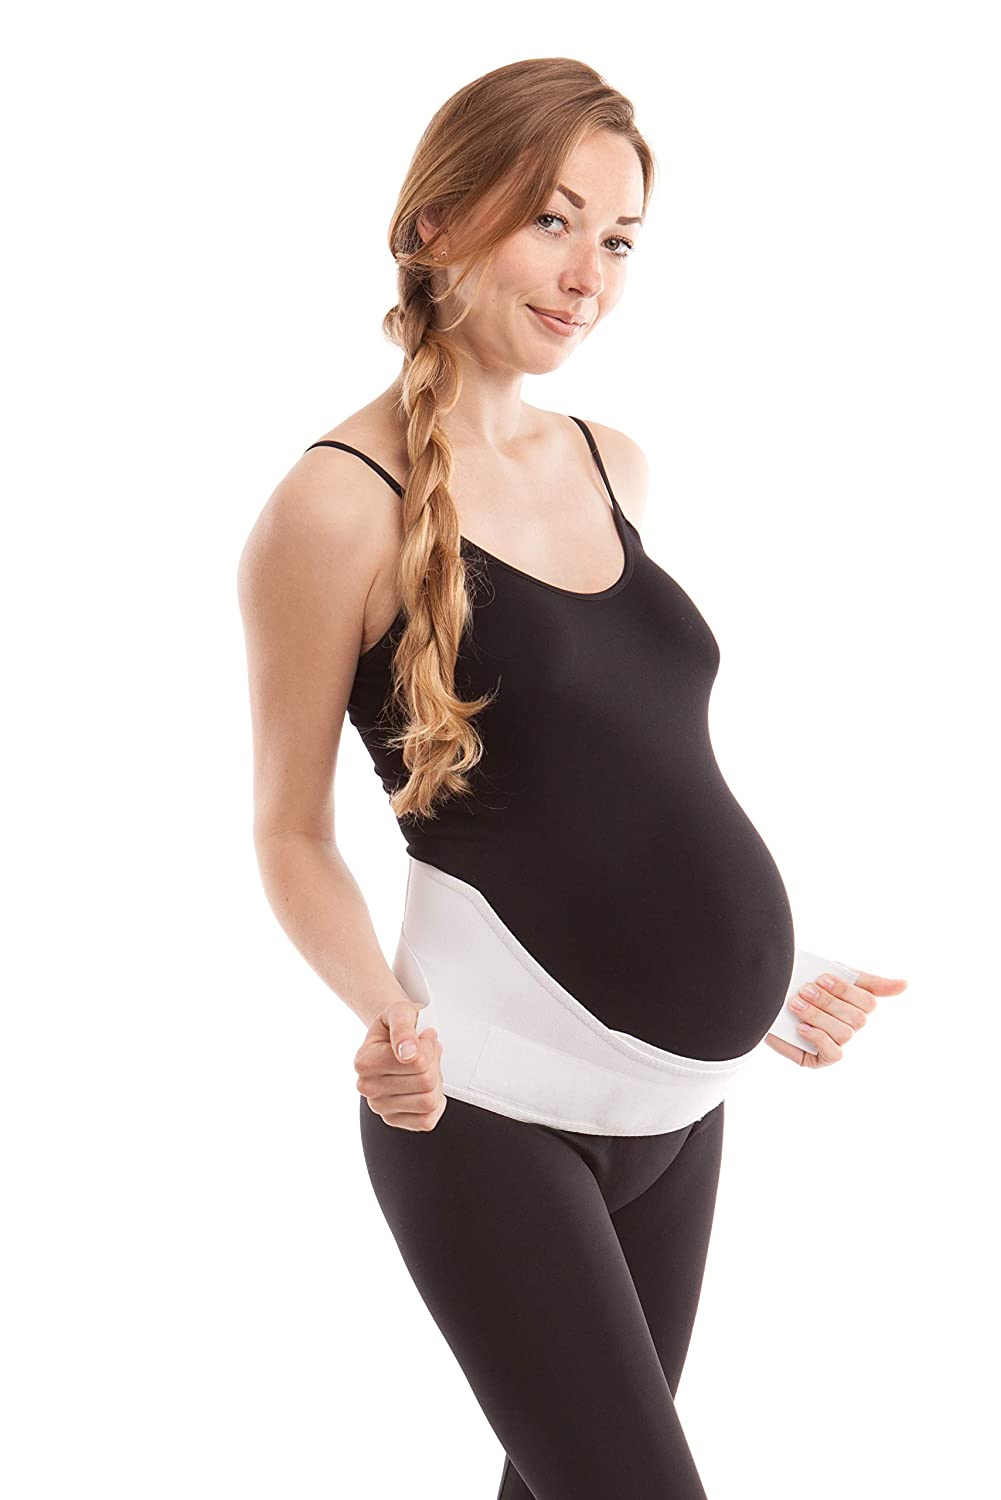 GABRIALLA Elastic Maternity Belt, BEST Medium Strength Pregnancy Support - Made in USA